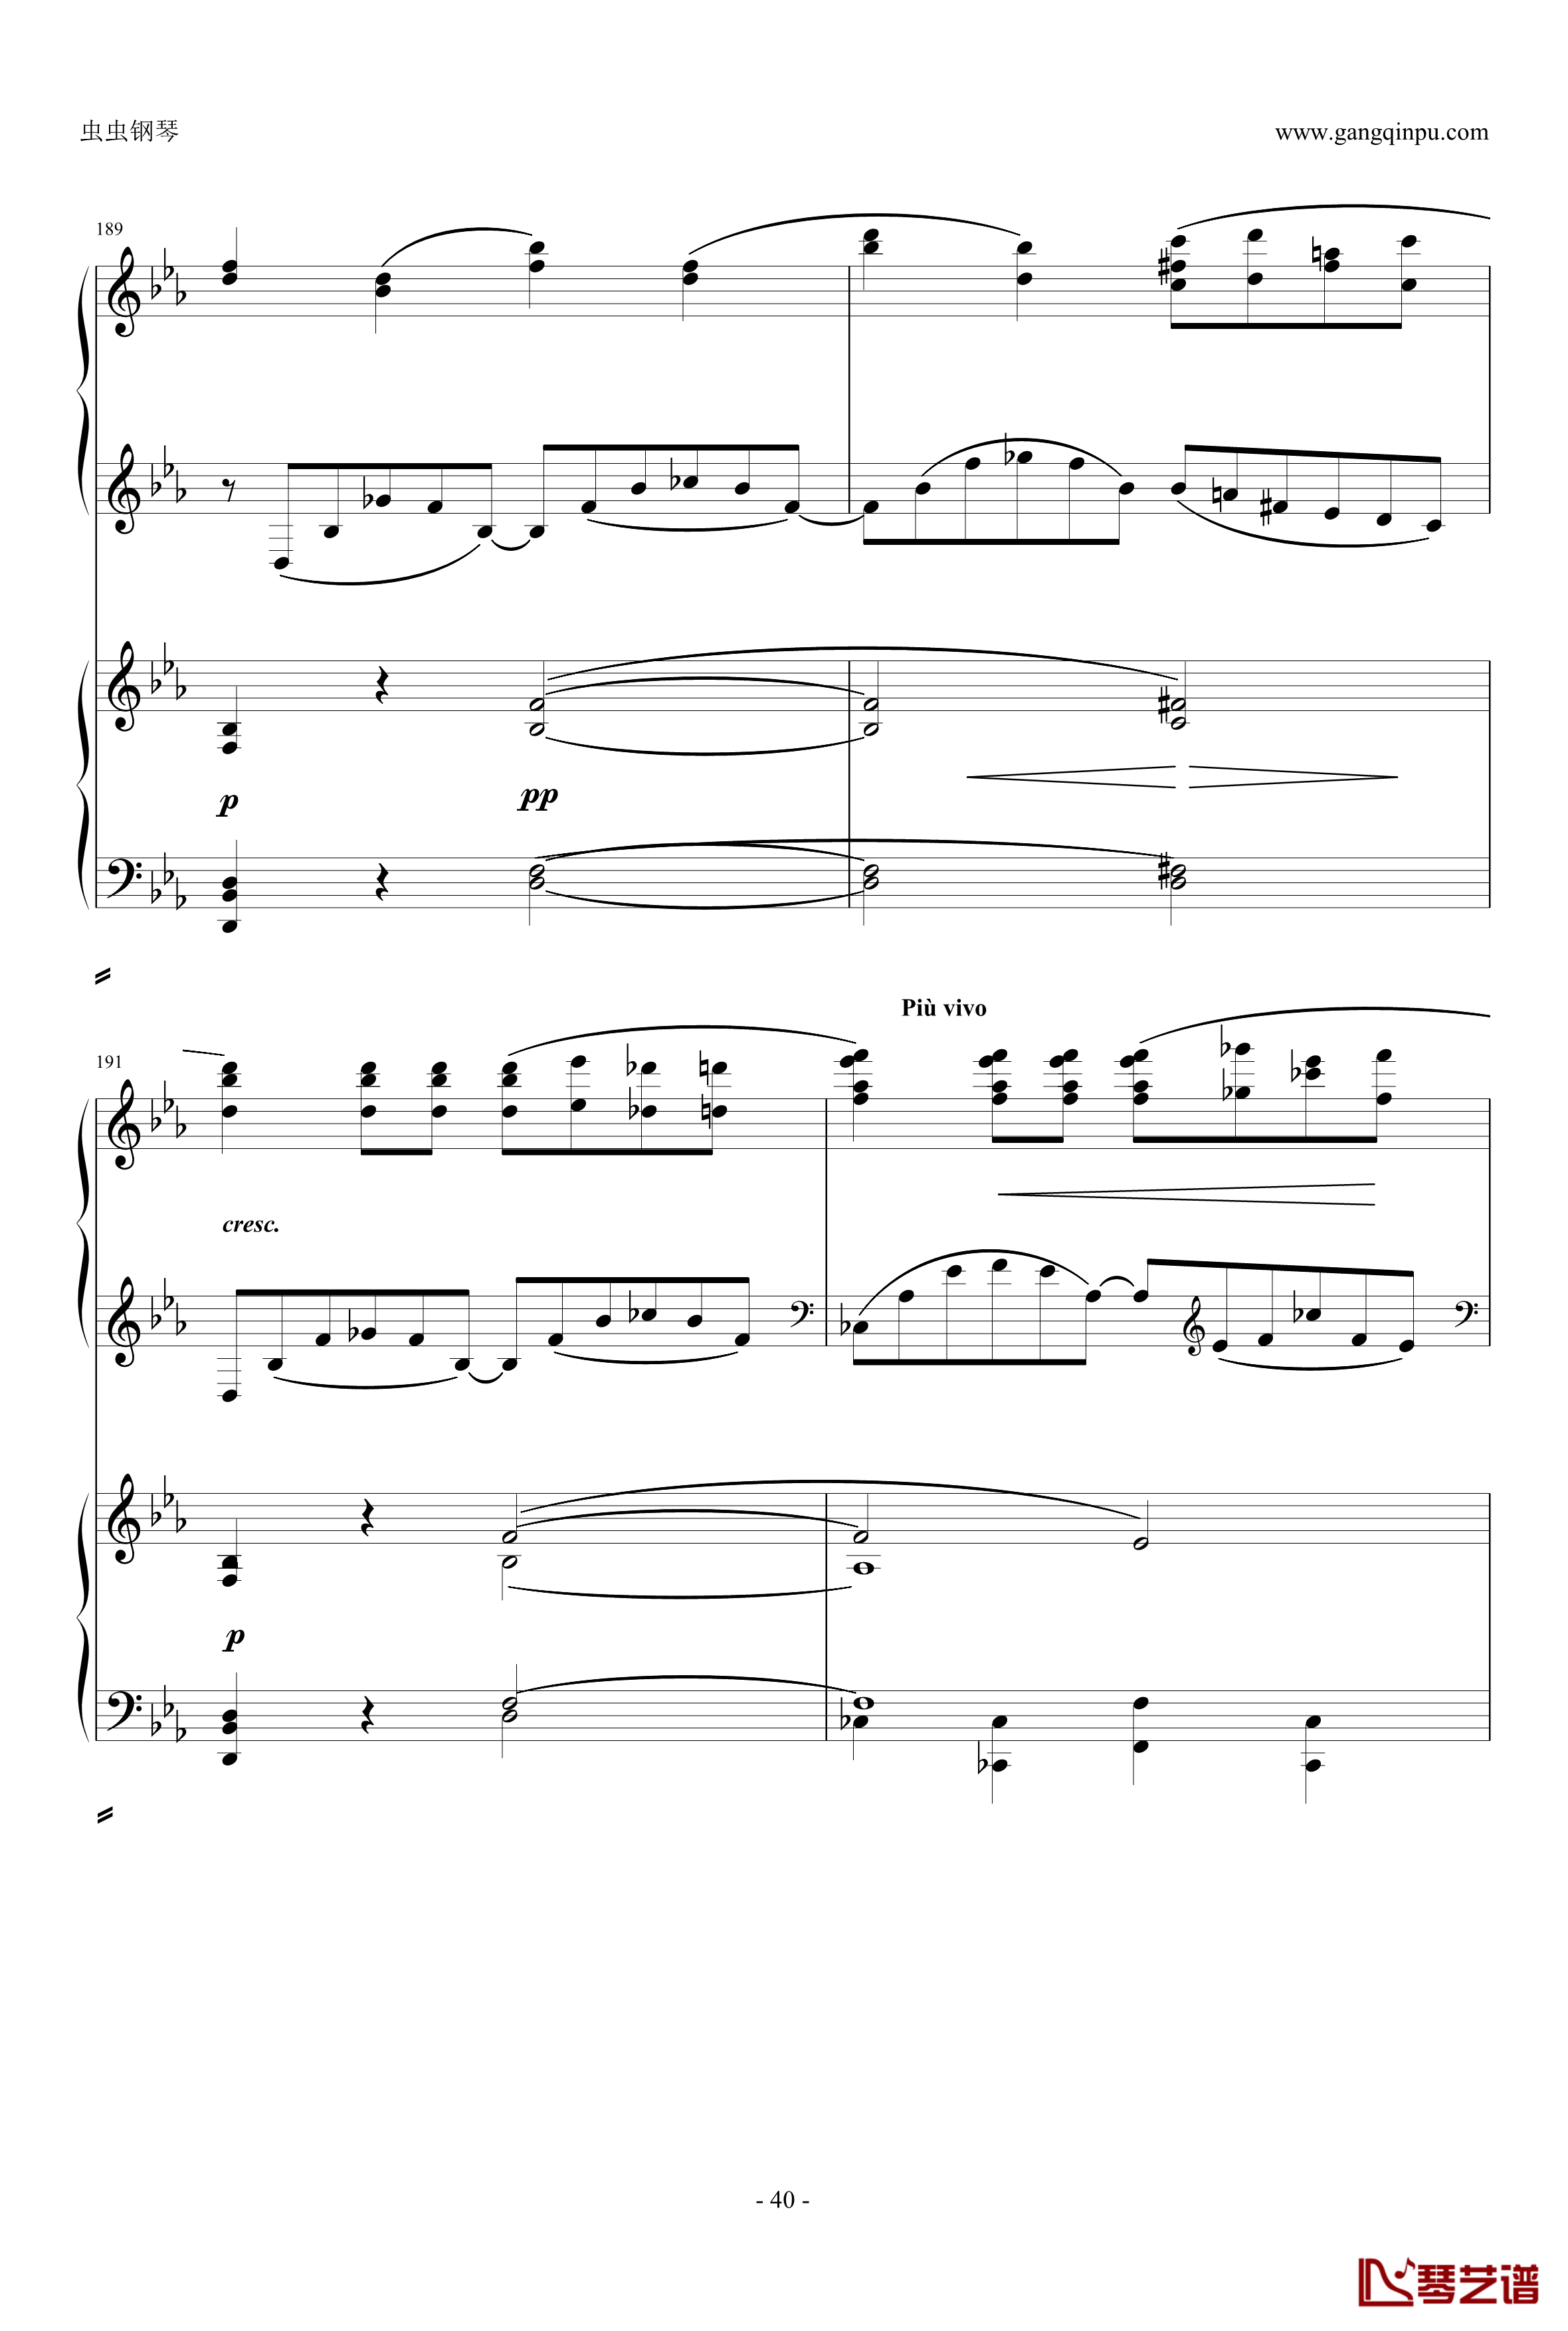 c小调第2钢琴协奏曲钢琴谱-拉赫马尼若夫40